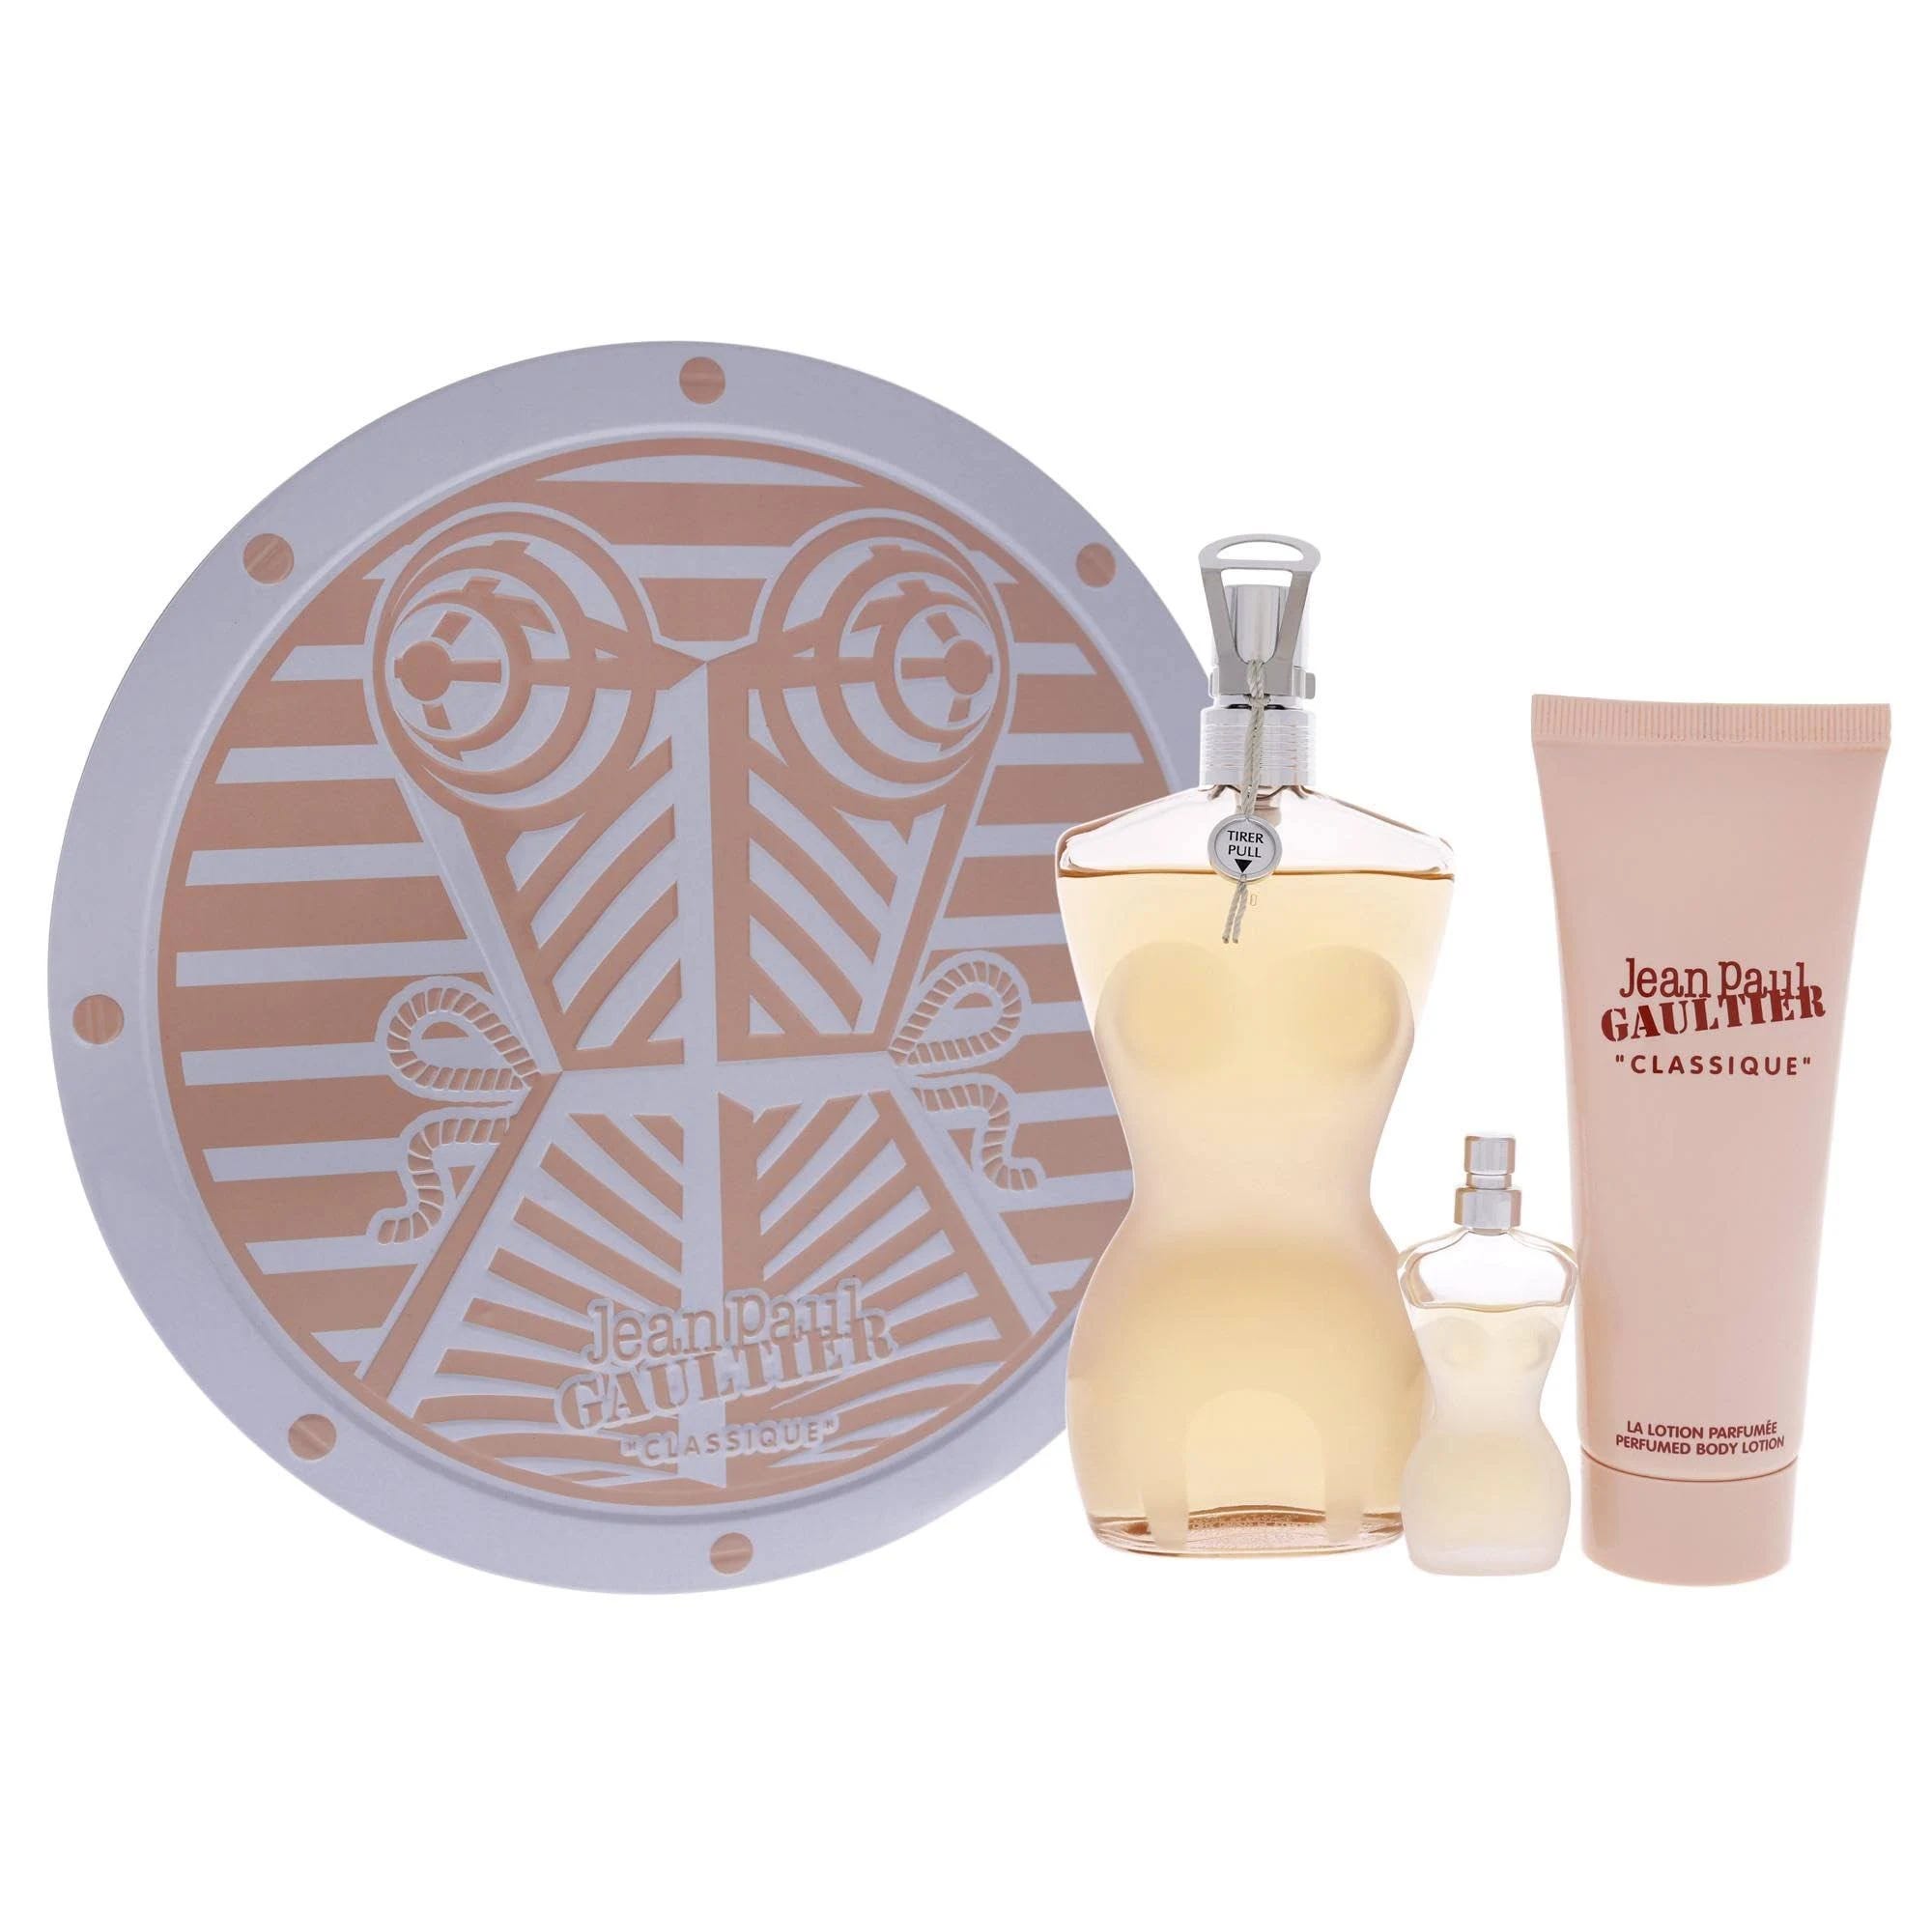 Jean Paul Gaultier Classique Women's Fragrance Gift Set | Image